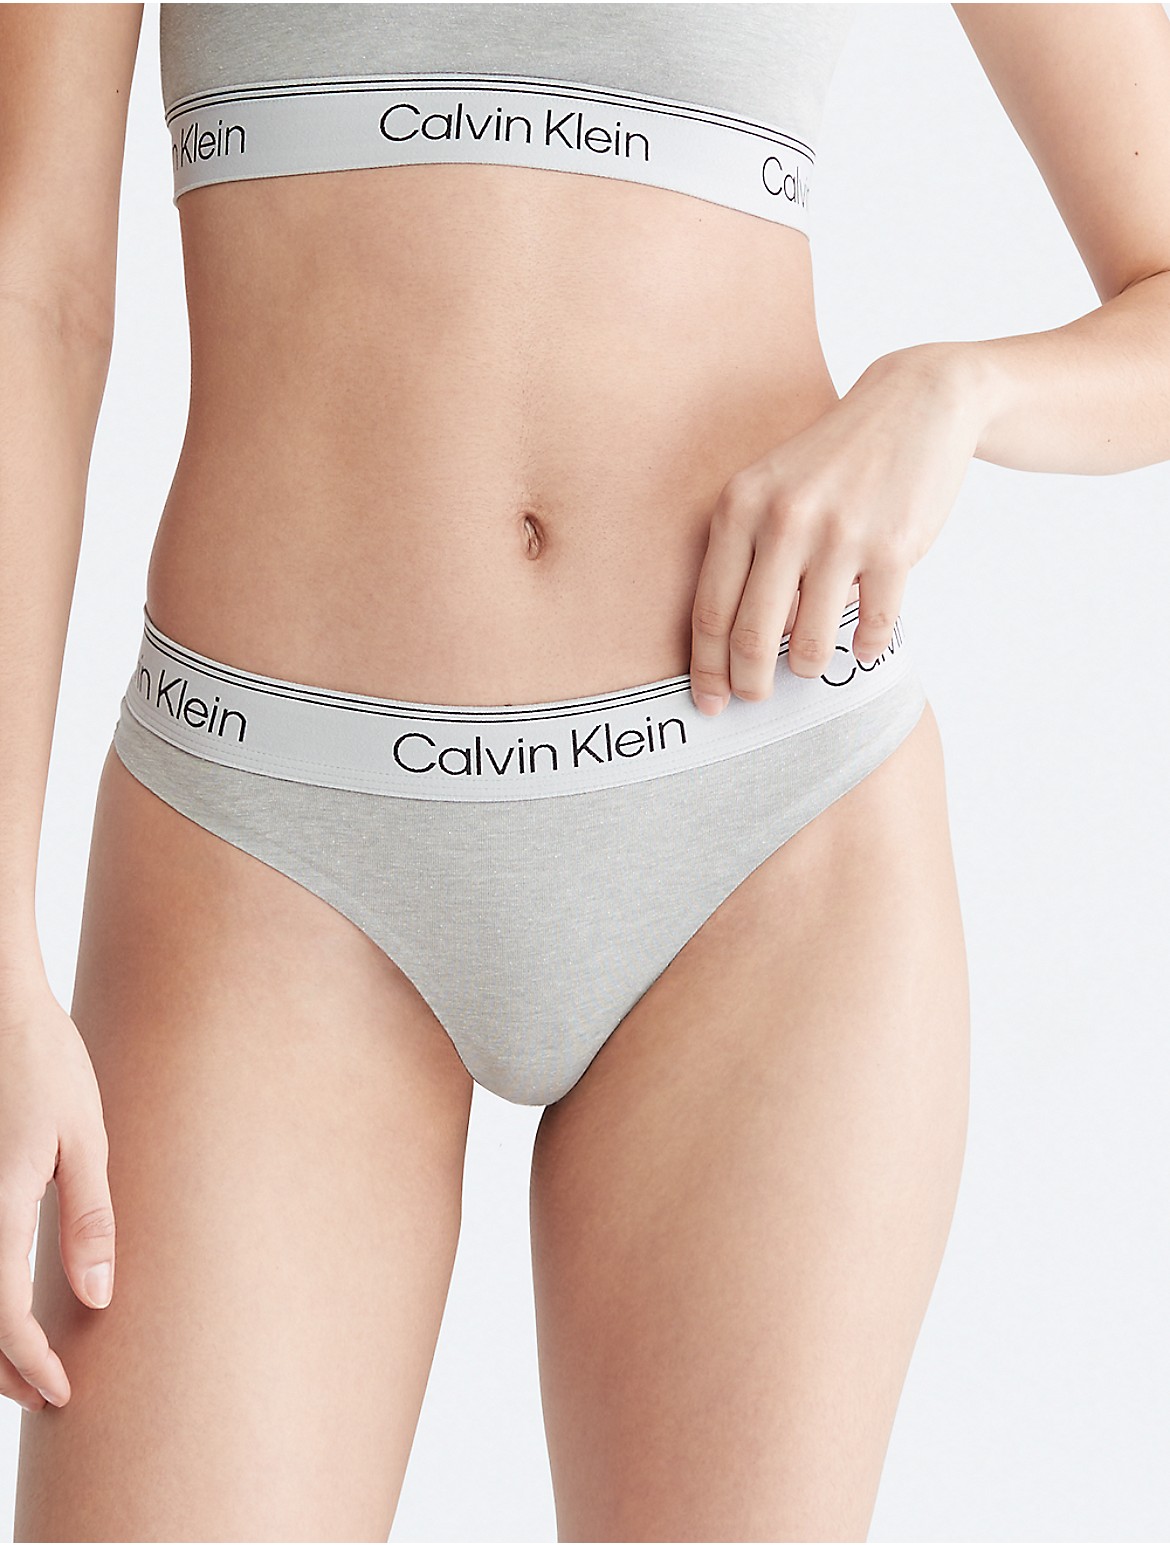 Calvin Klein Women's Calvin Klein Athletic Thong - Grey - XS